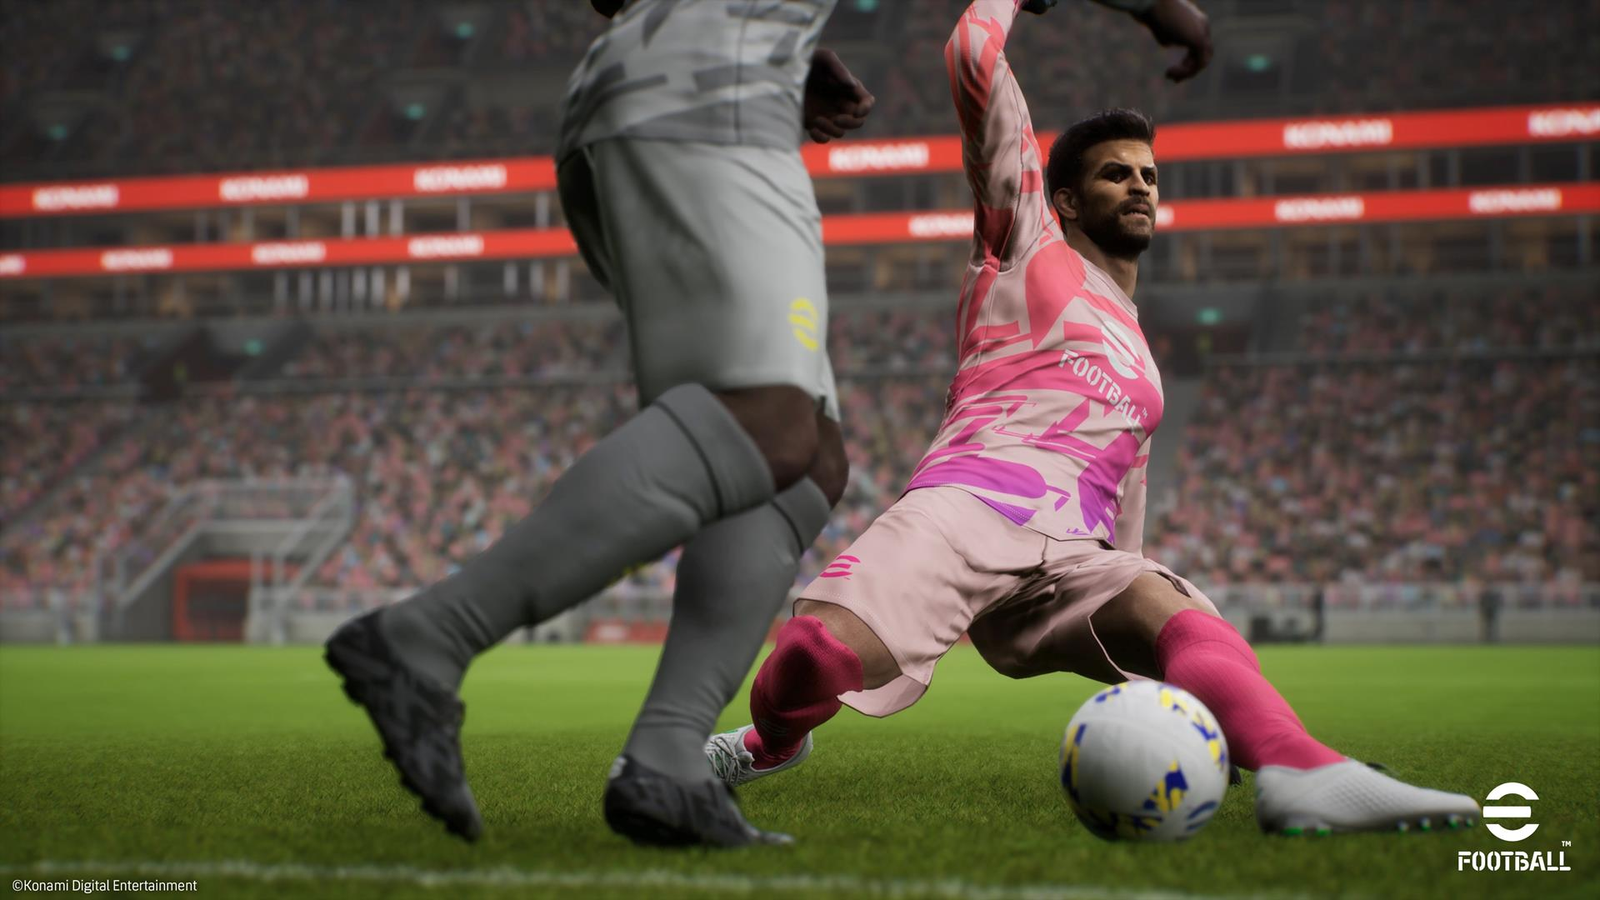 eFootball Announced as KONAMI's Free-to-Play, Cross-Platform Football Game